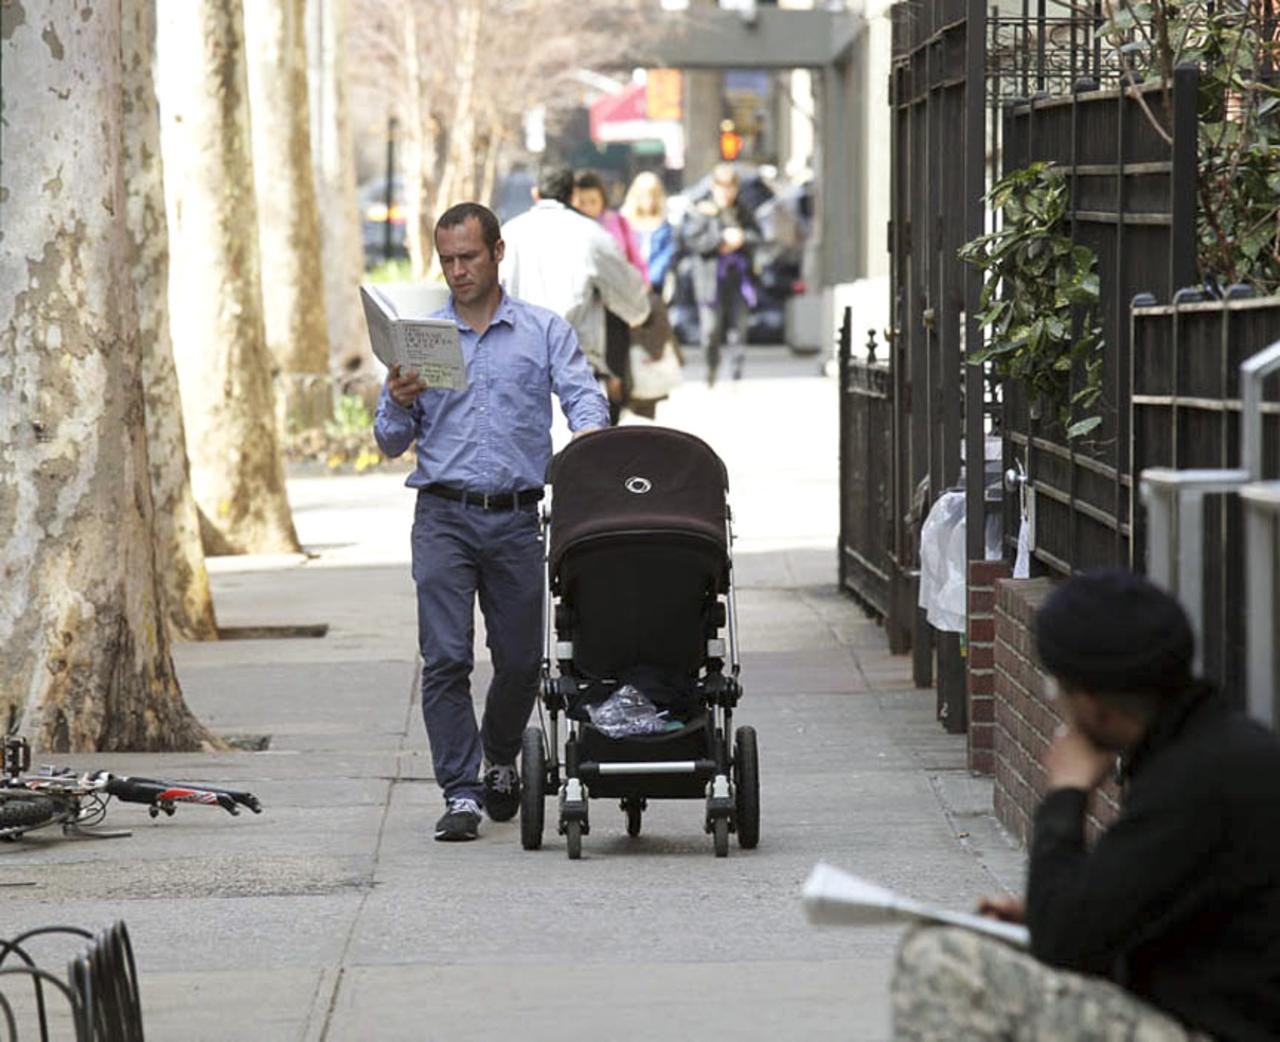 A man reads a book while pushing a stroller on 12th Street near Third Avenue.